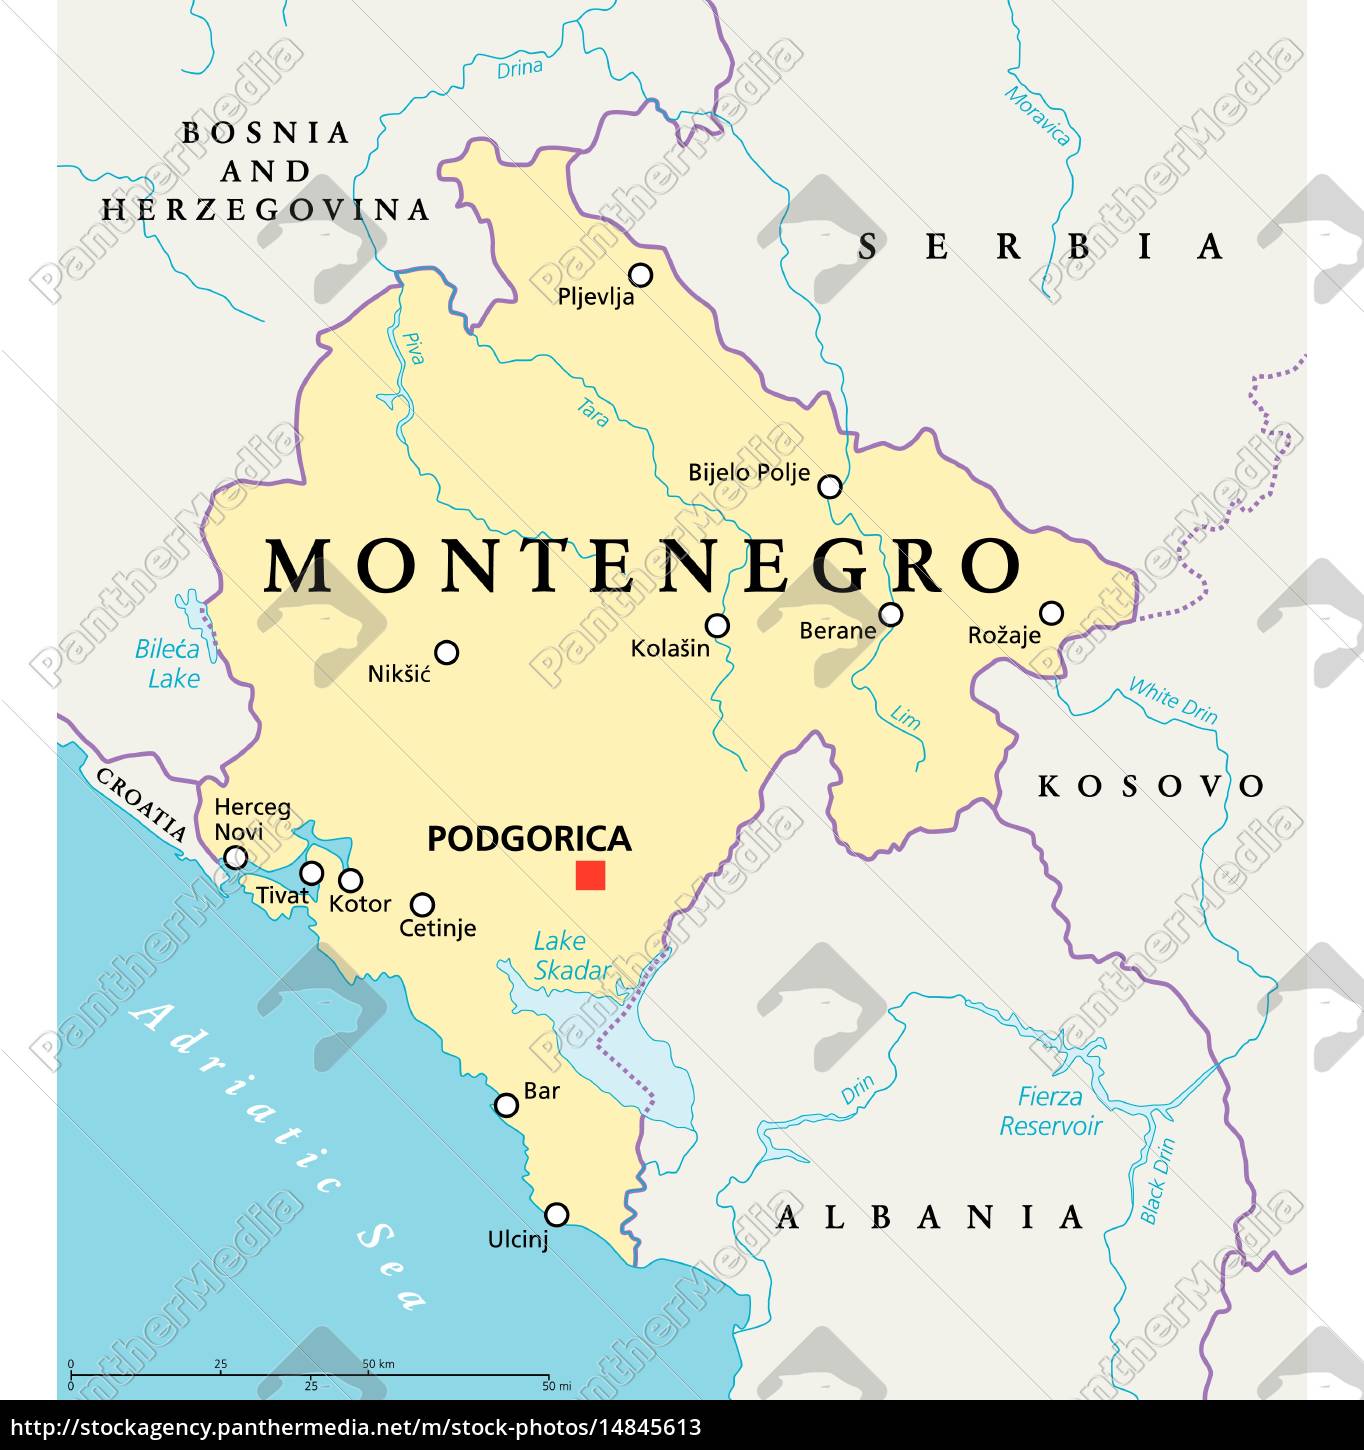 Kort Montenegro montenegro politisk kort   Royalty Free Image   #14845613  Kort Montenegro